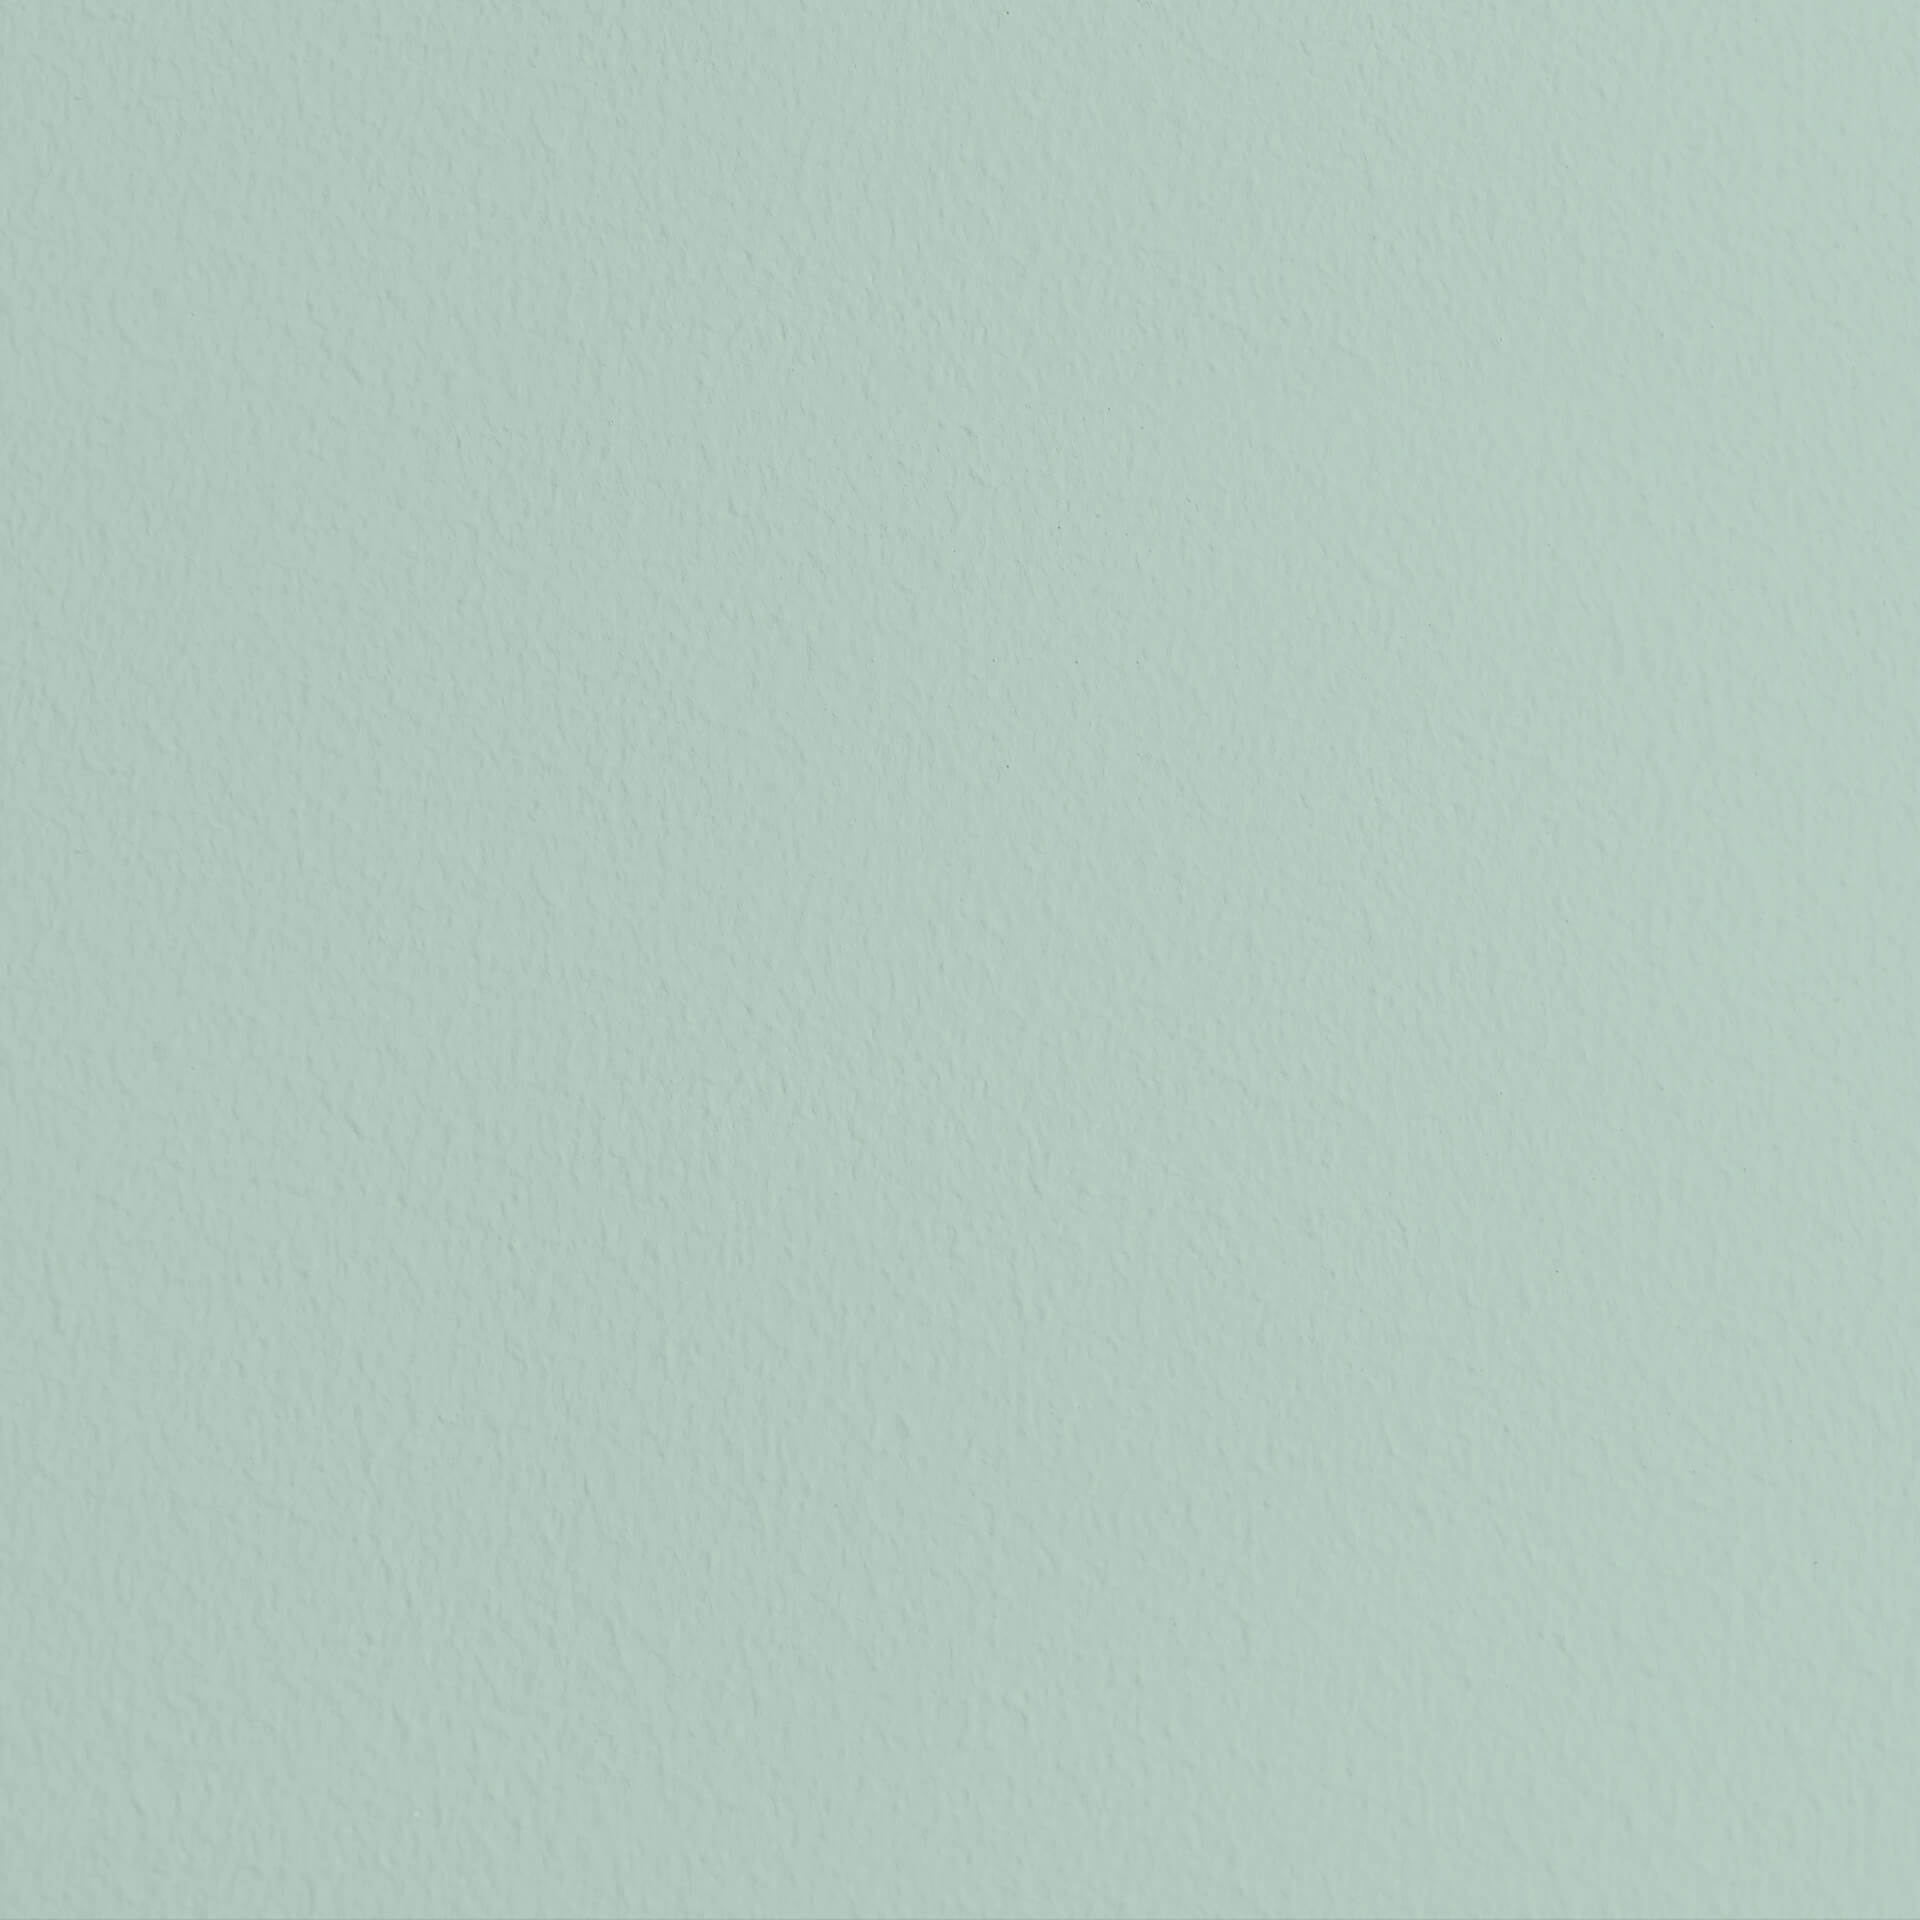 Mylands Copper Green No. 36 - Marble Matt Emulsion / Wandfarbe, 1L